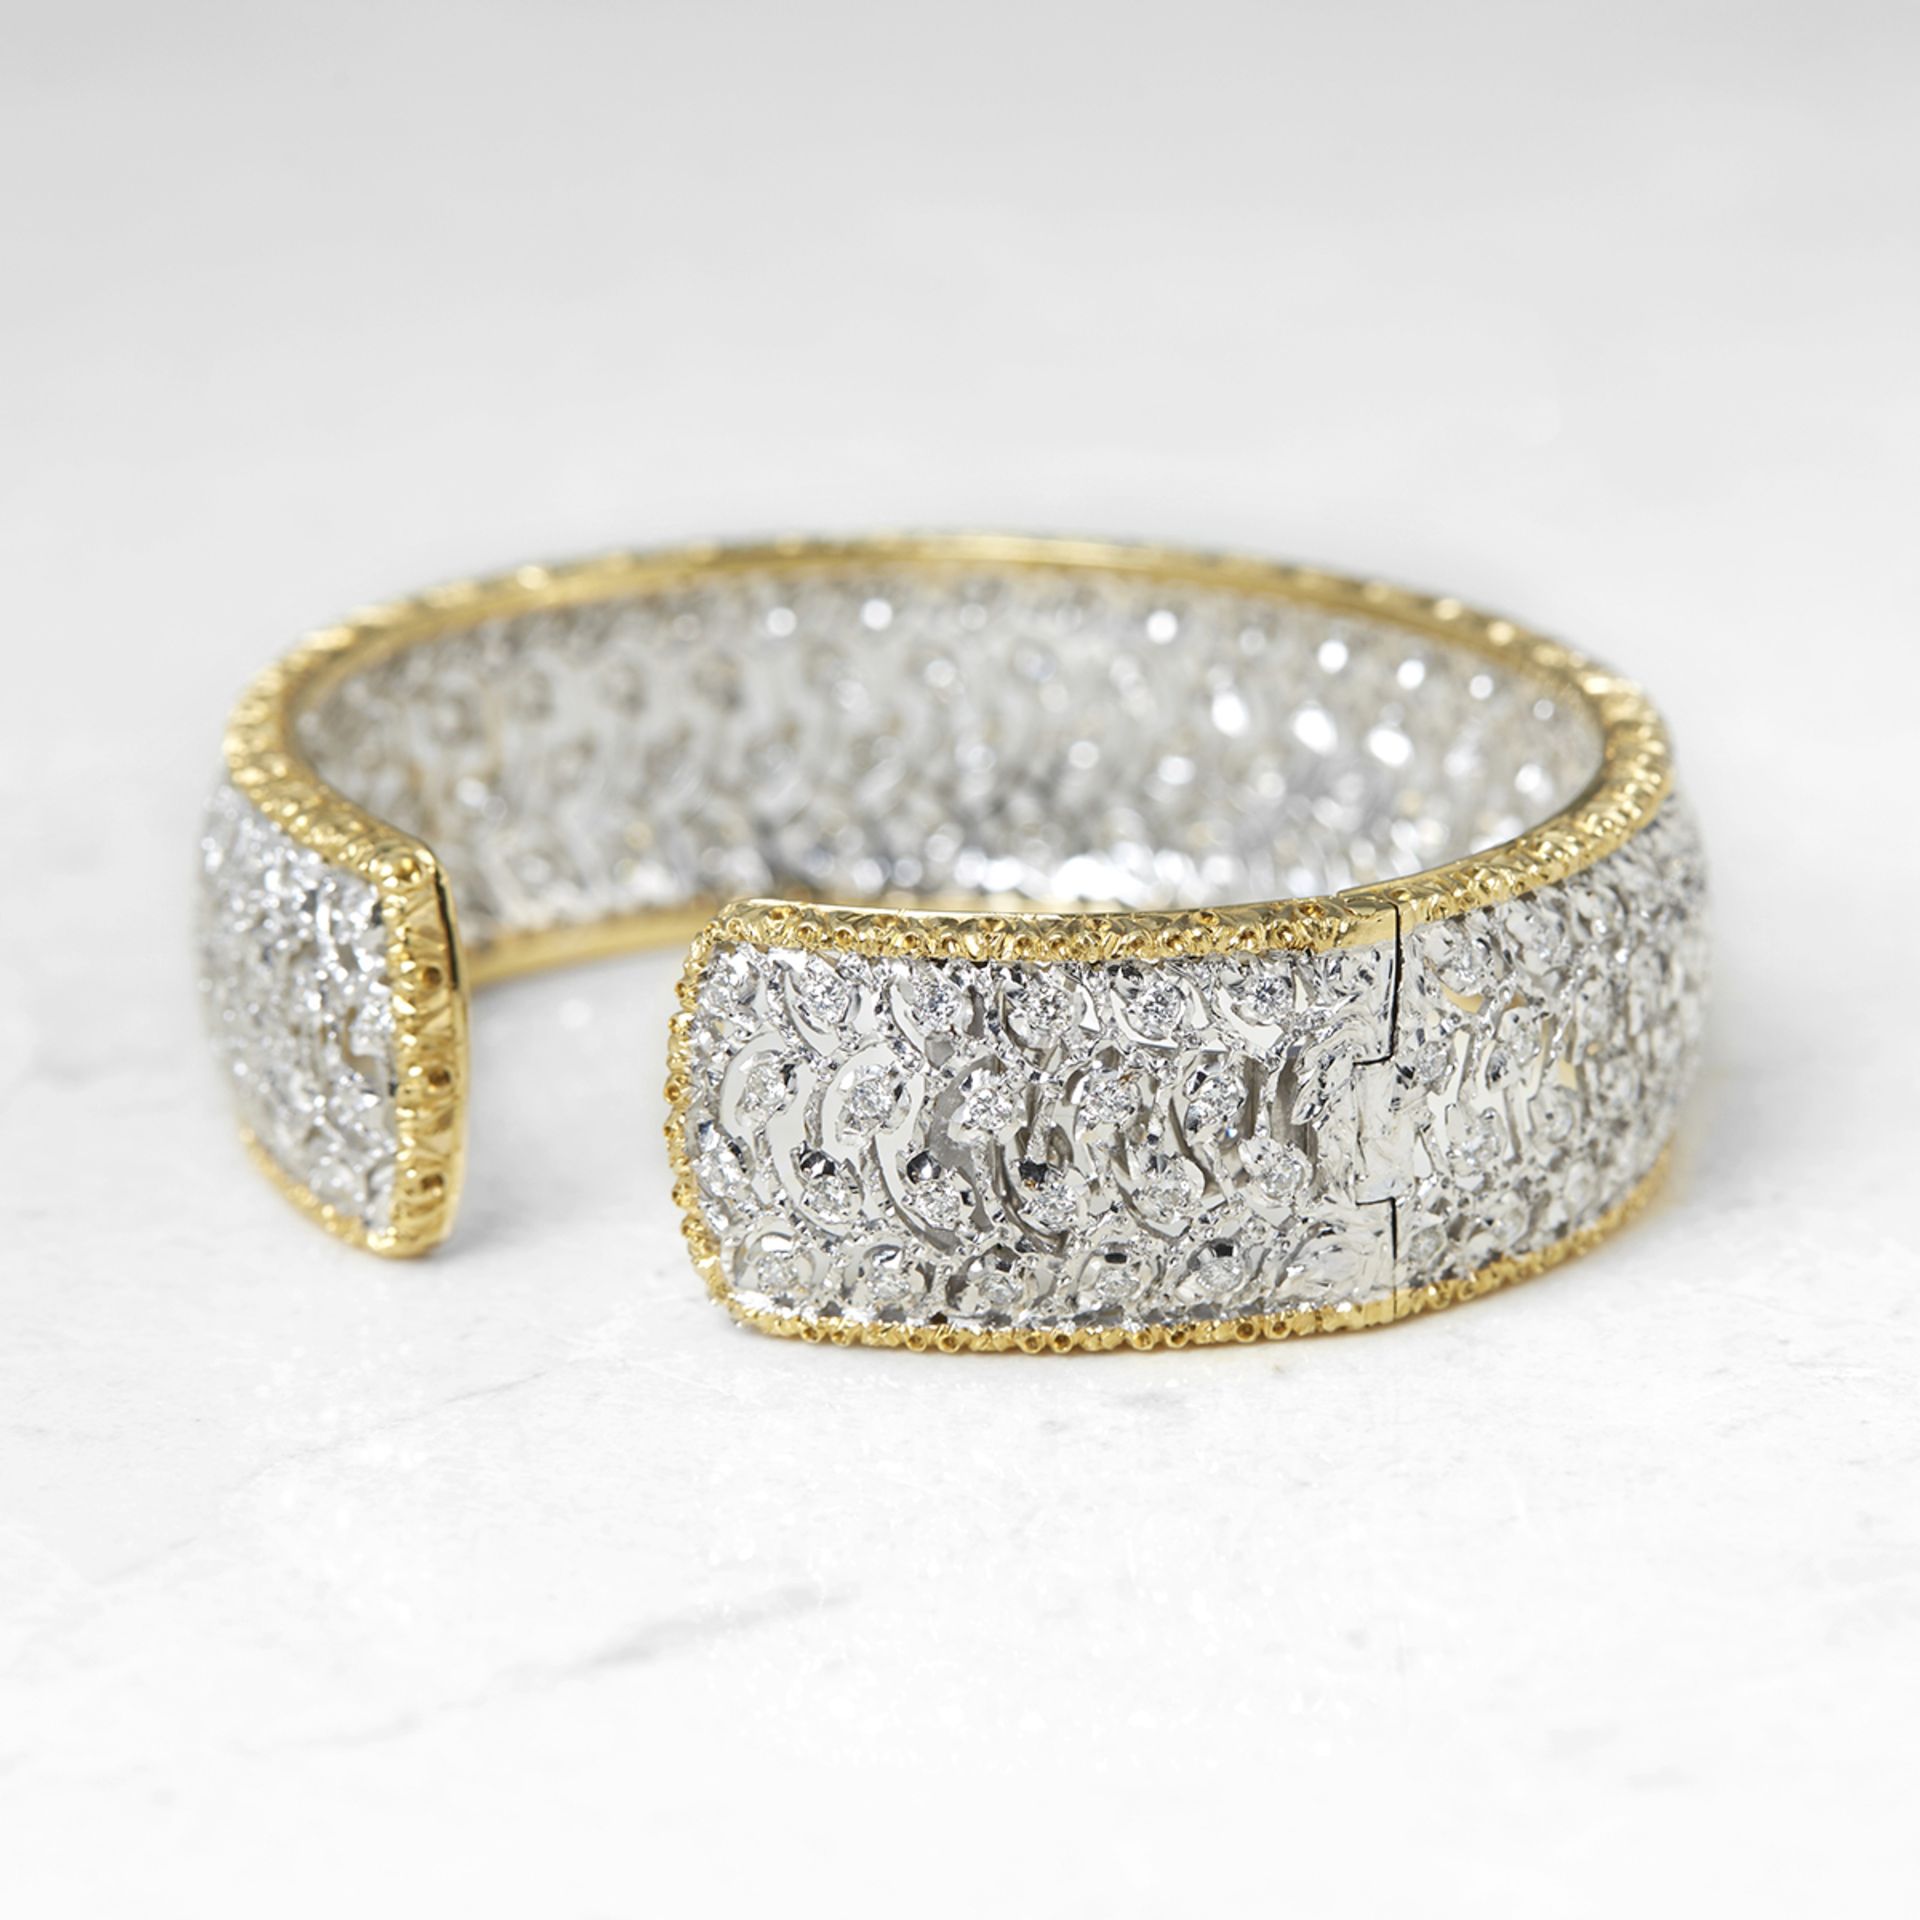 Buccellati 18k White & Yellow Gold 5.00ct Diamond Cuff Bracelet with Presentation Box - Image 2 of 8